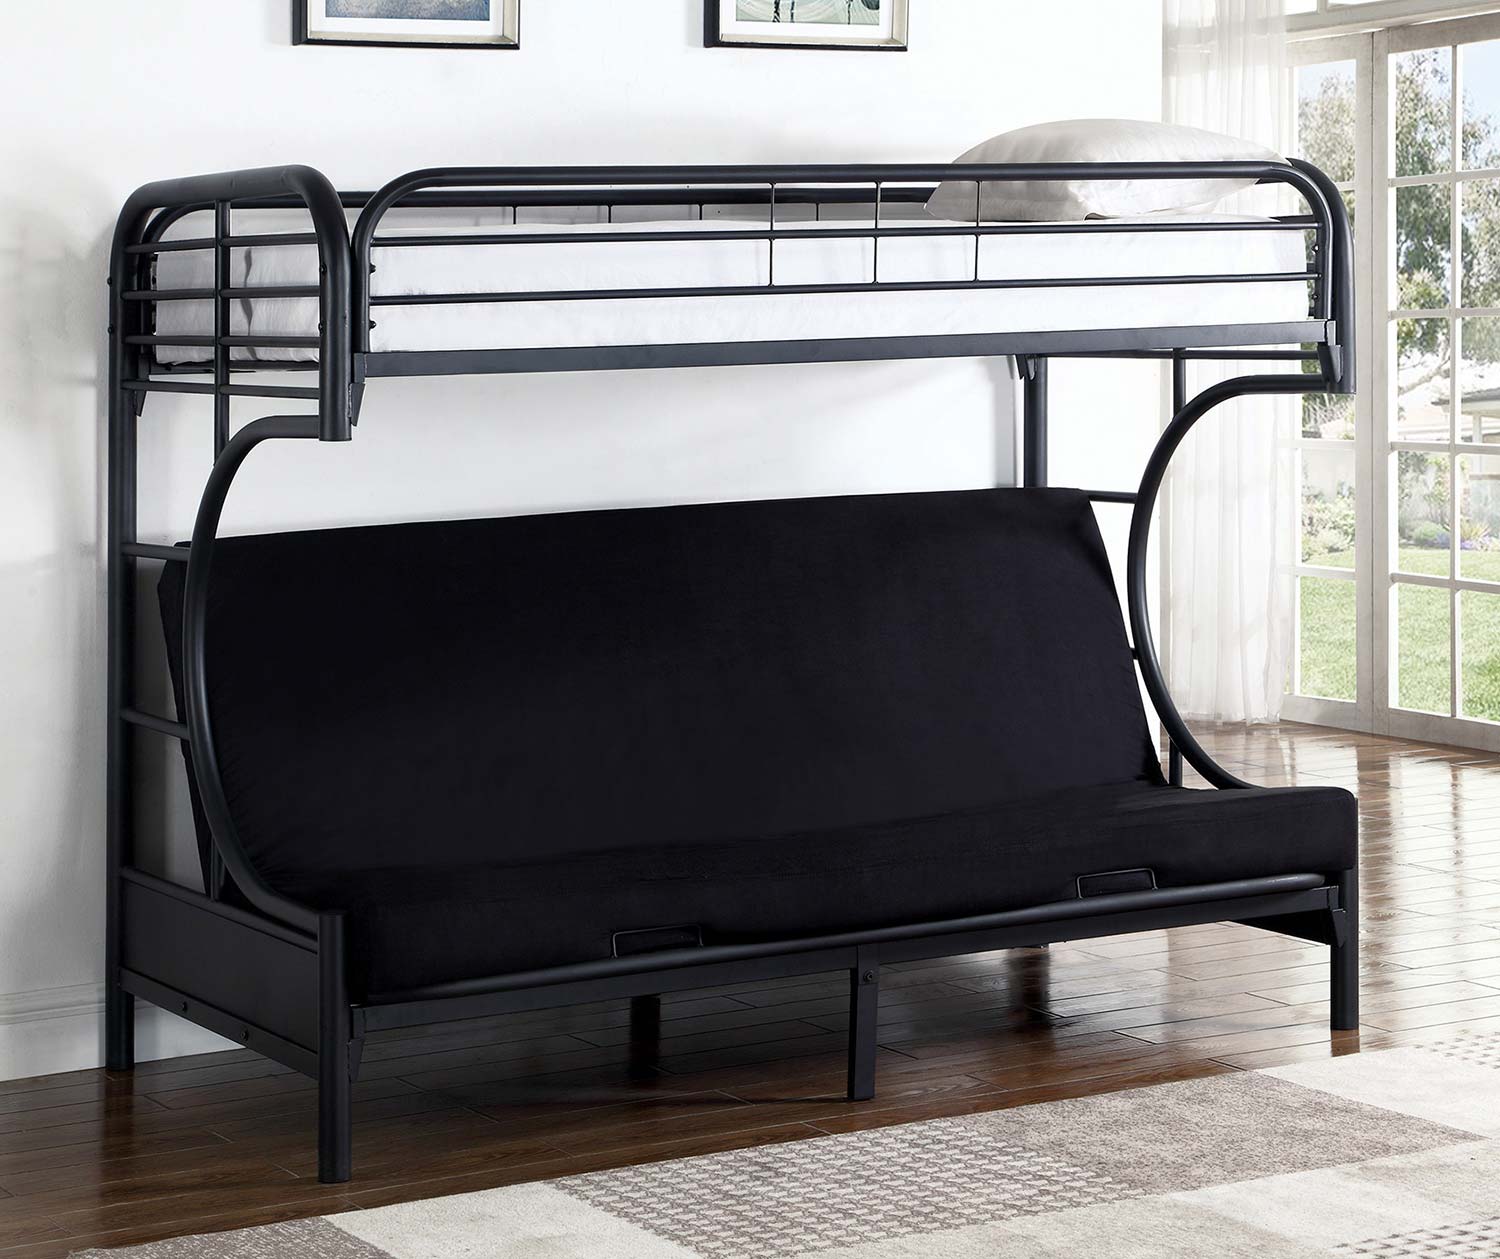 Coaster Atticus Twin/Futon Bunk Bed - Black